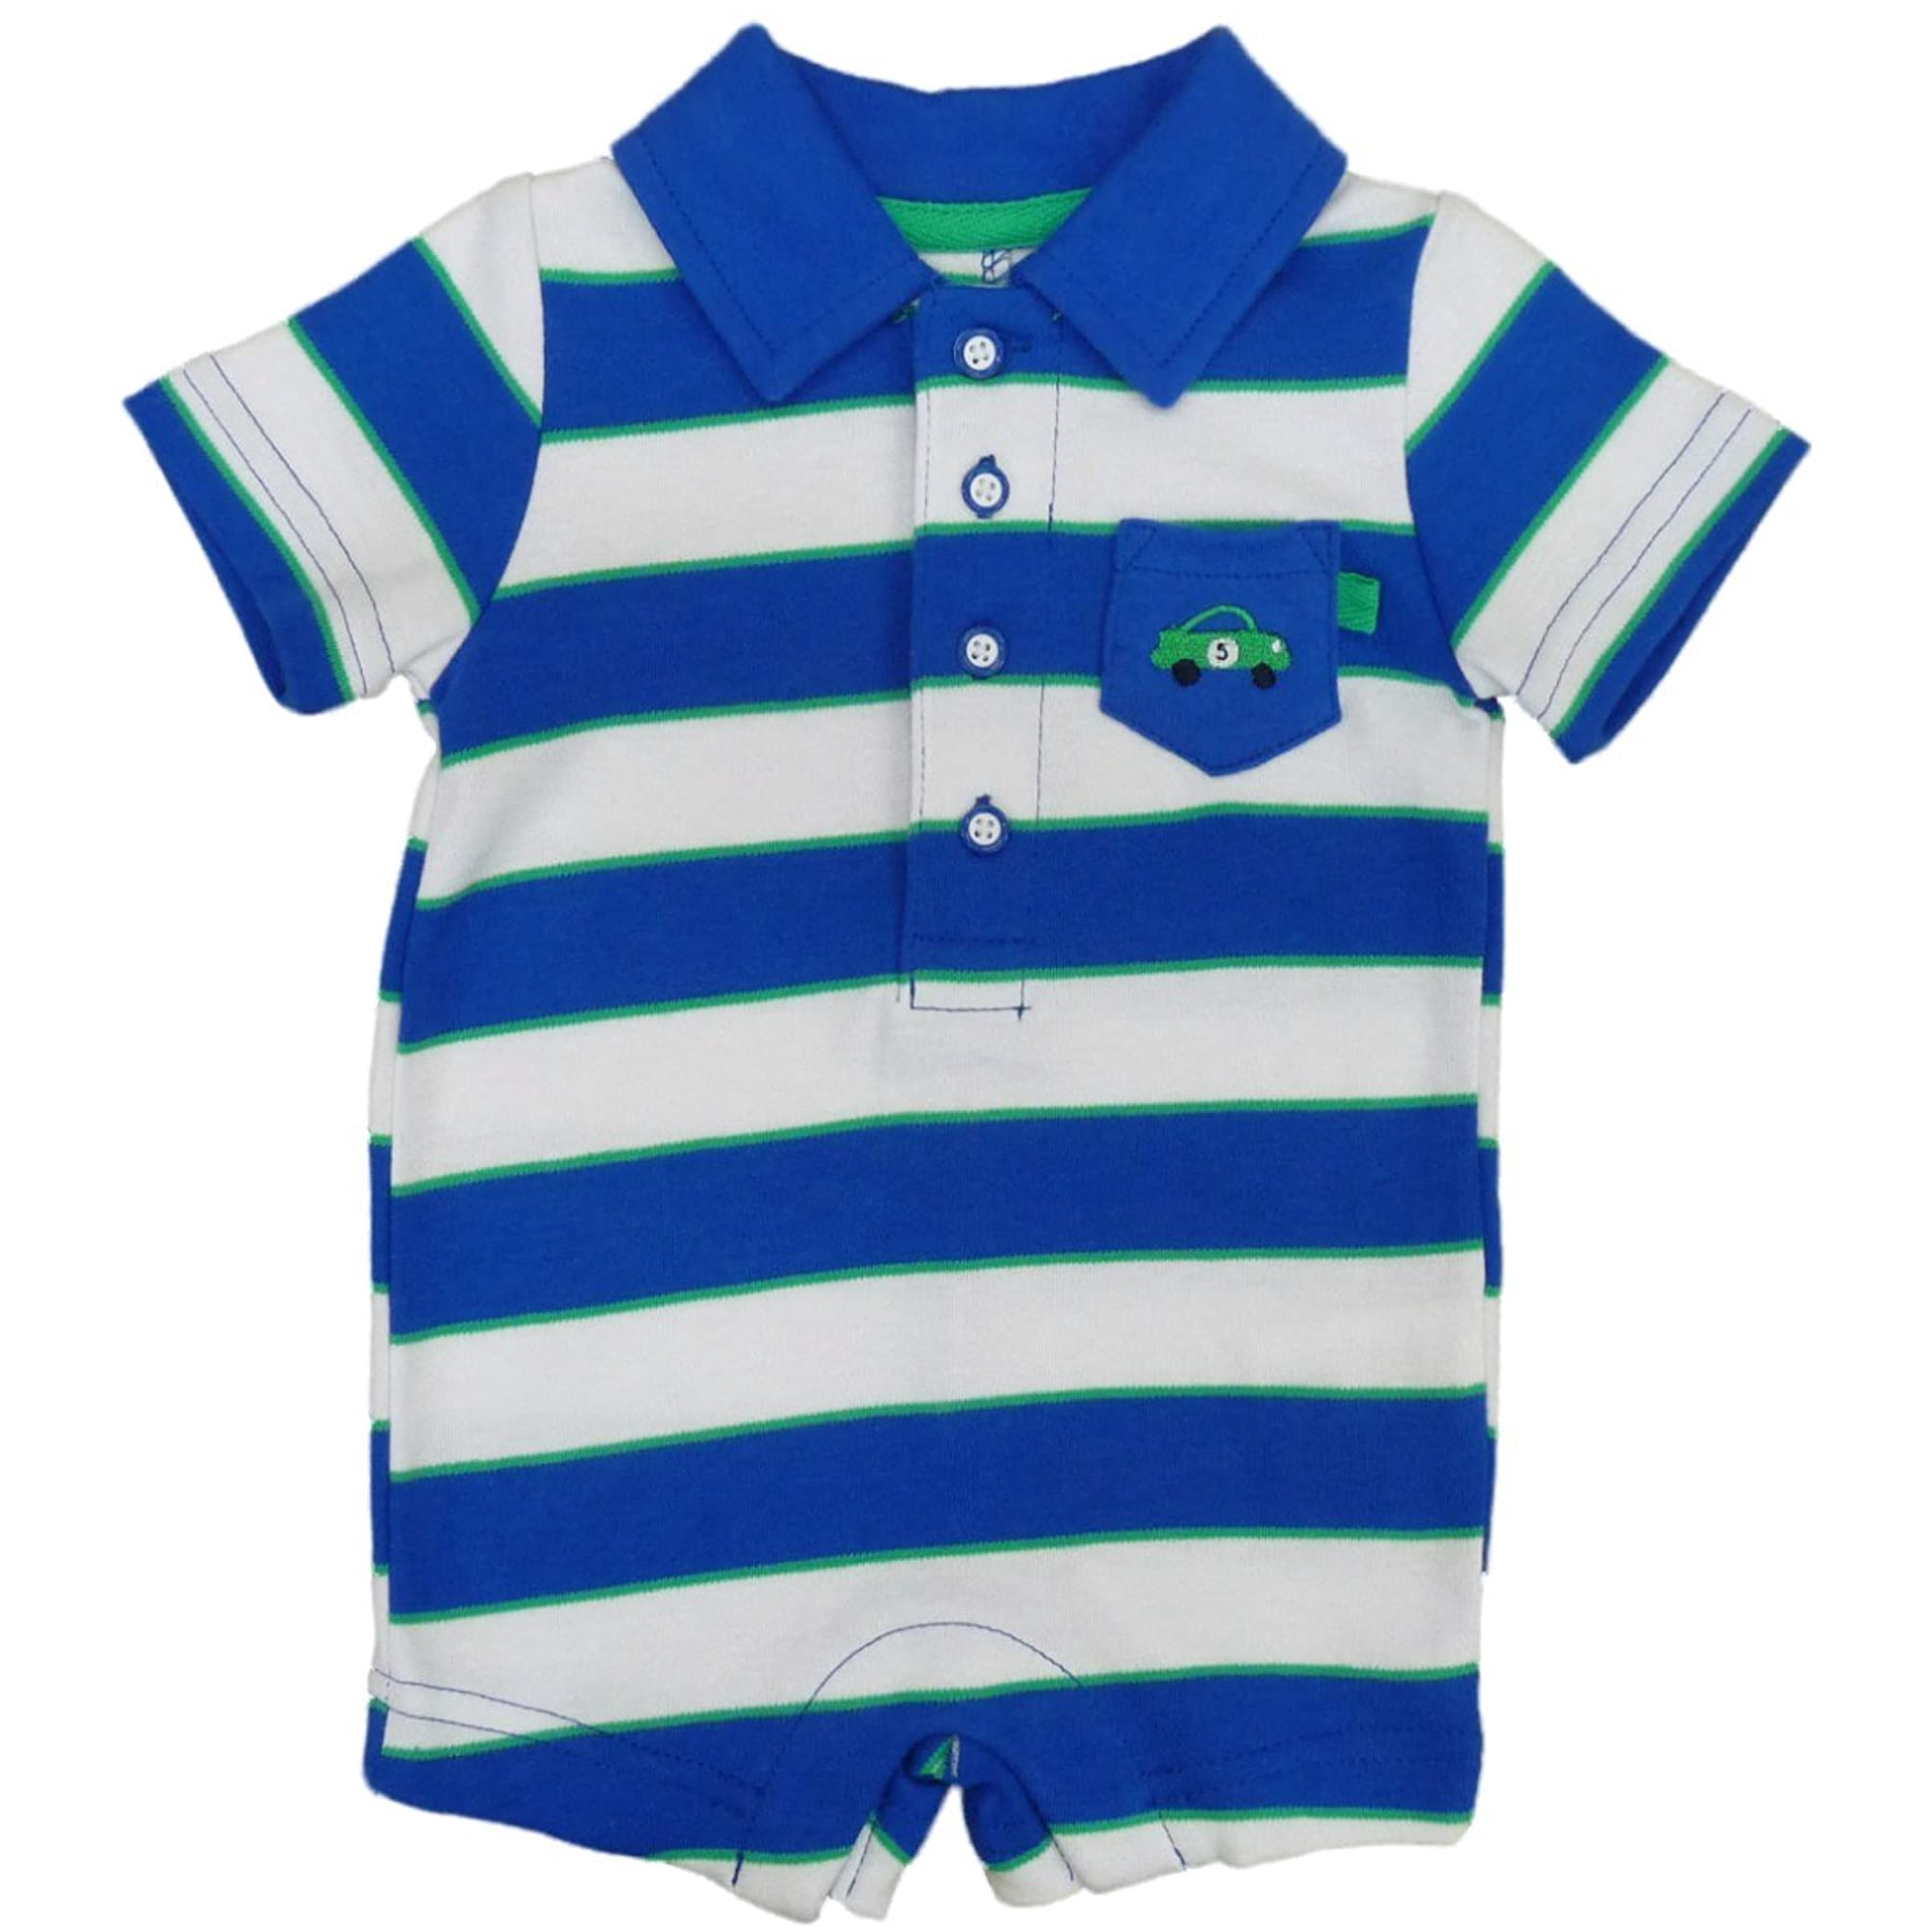 Wonders Infant Boys Blue Striped Outfit Race Car Romper Newborn | Walmart Canada